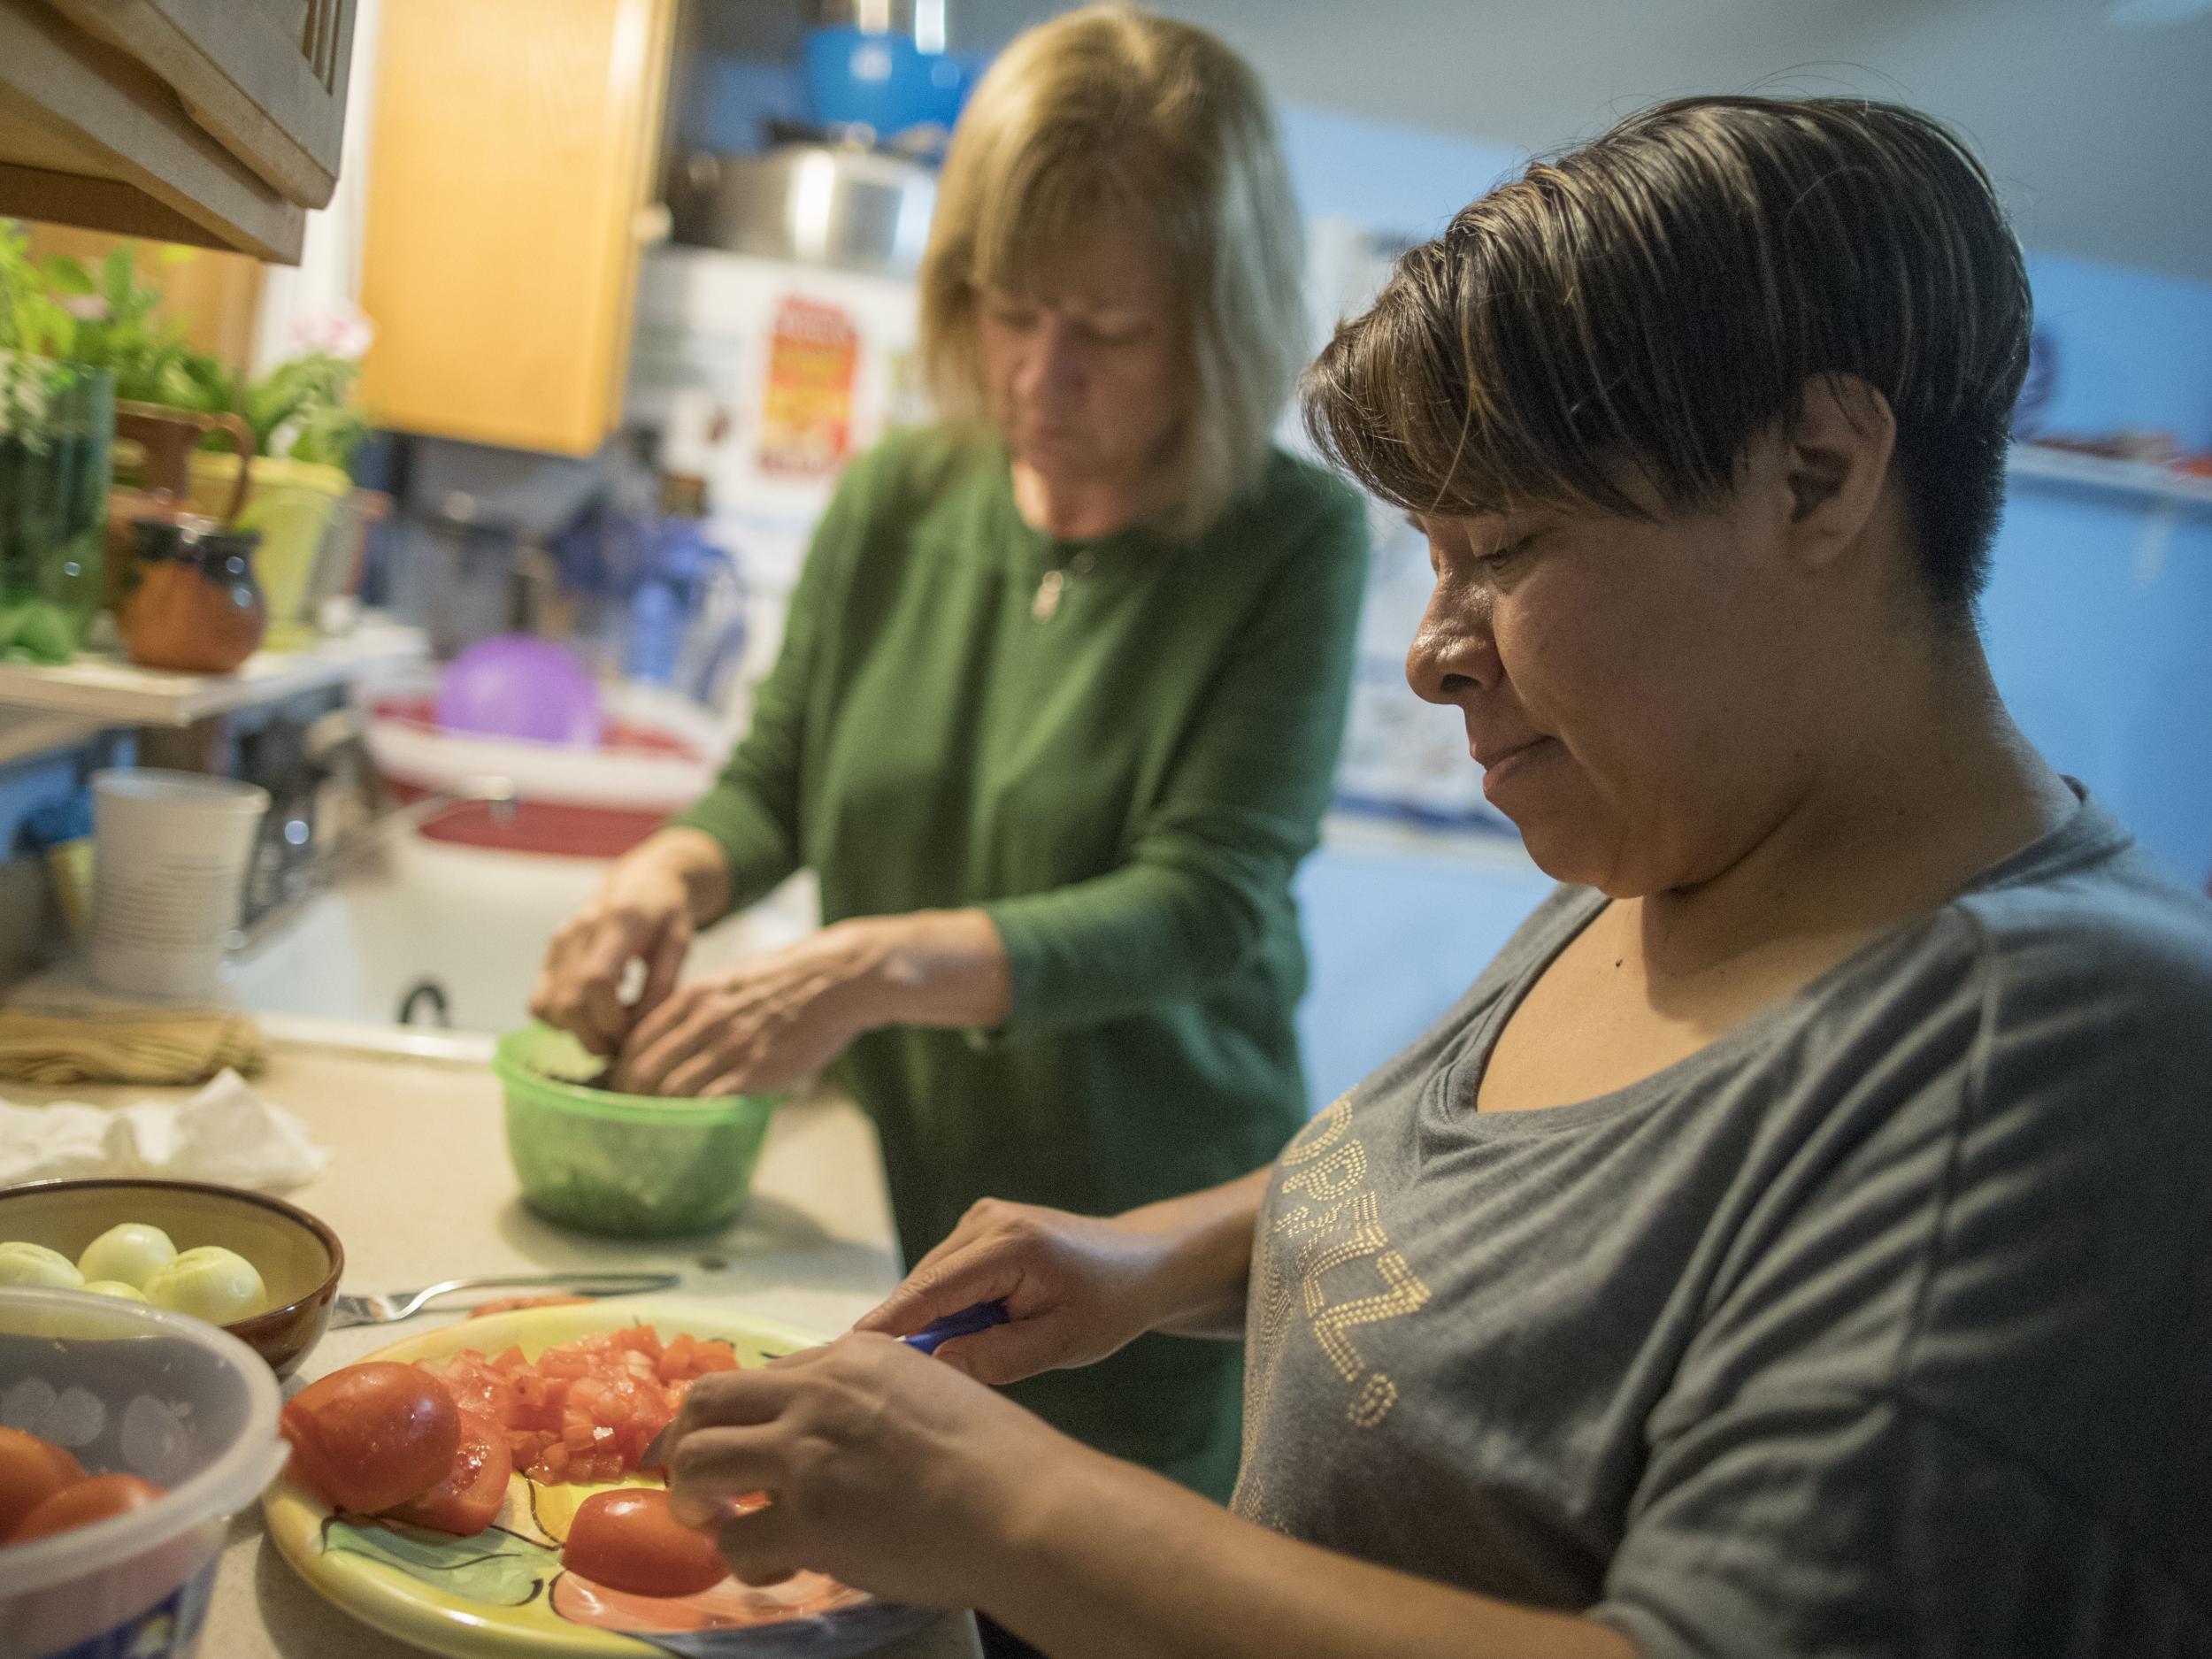 Ruth Silverberg, left, helps Maribel Torres prepare dinner at Maribel's home in the Staten Island borough of New York